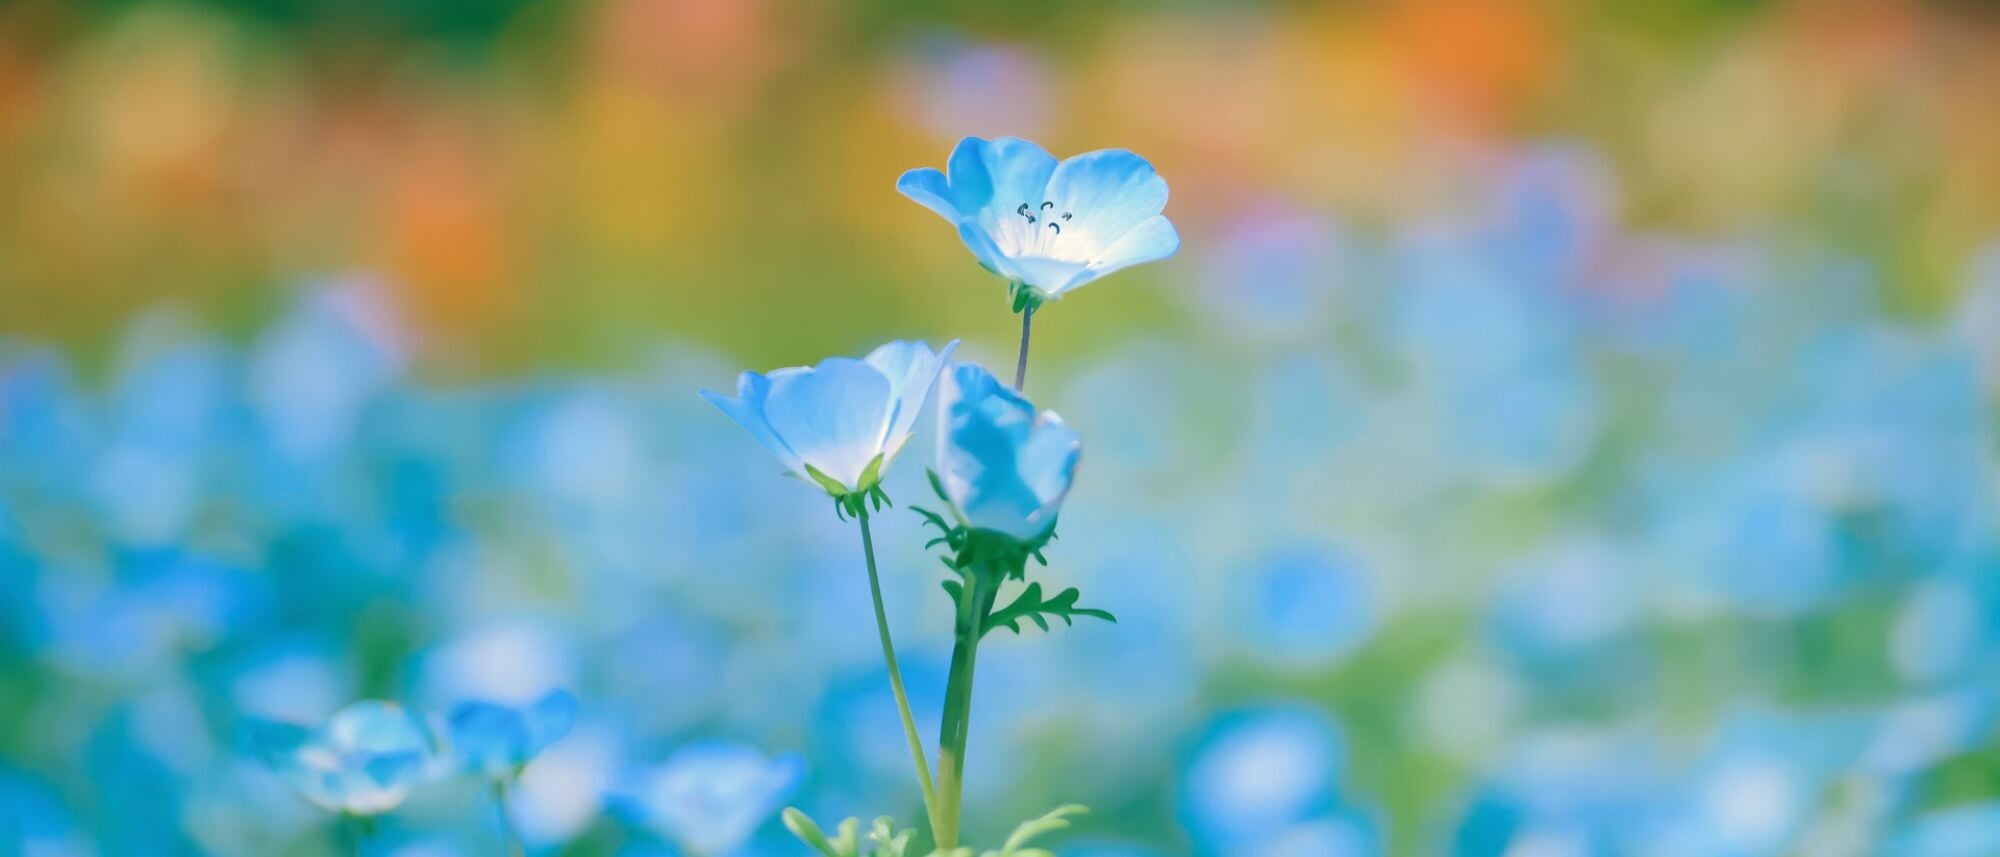 Baby blue flower blooming in a field grow baby blue eyes flowers